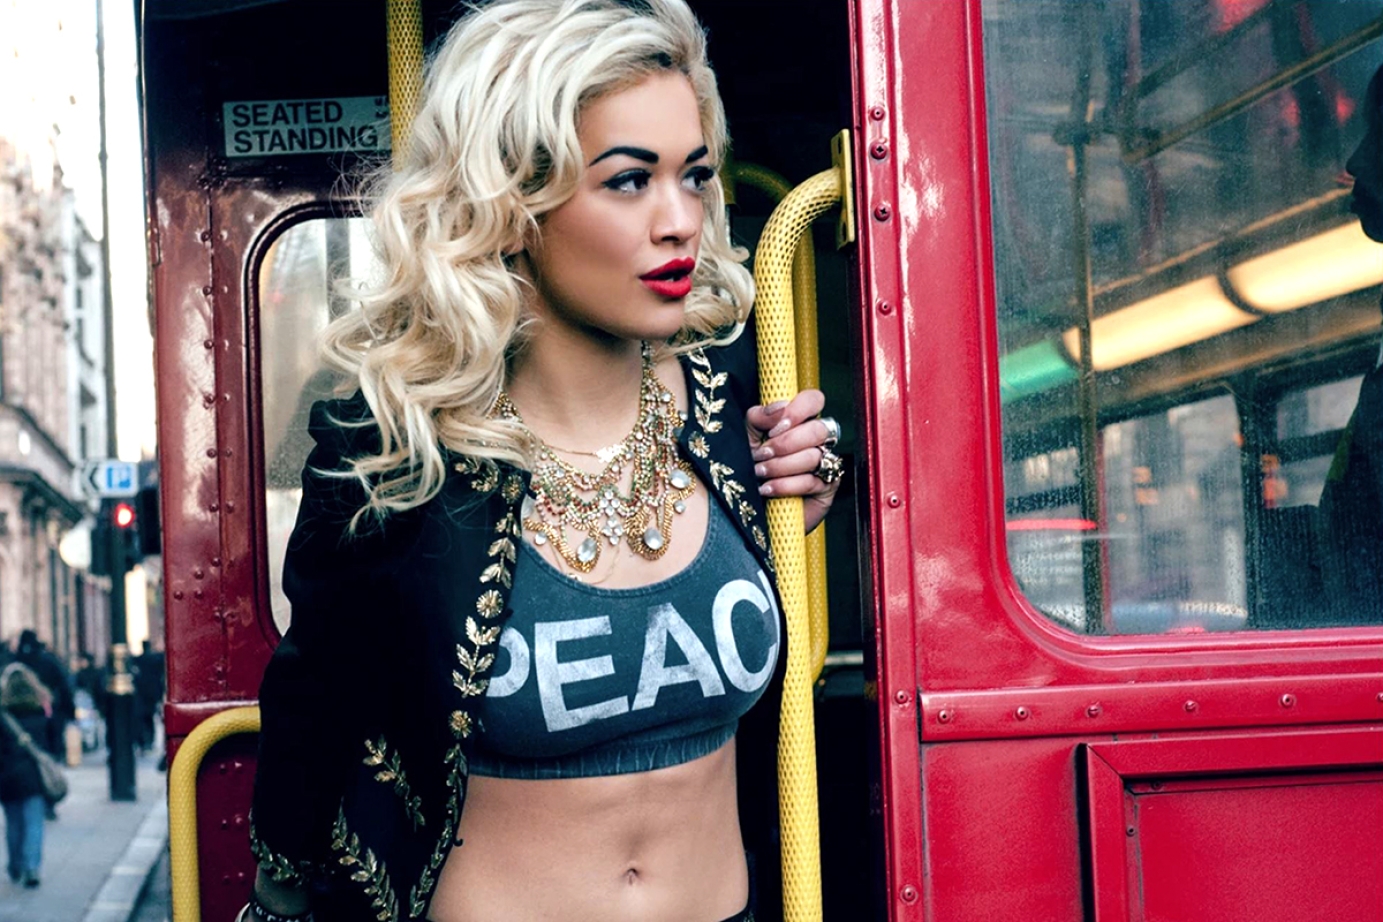 Rita Ora 'Press Shots' for Debut Album Release